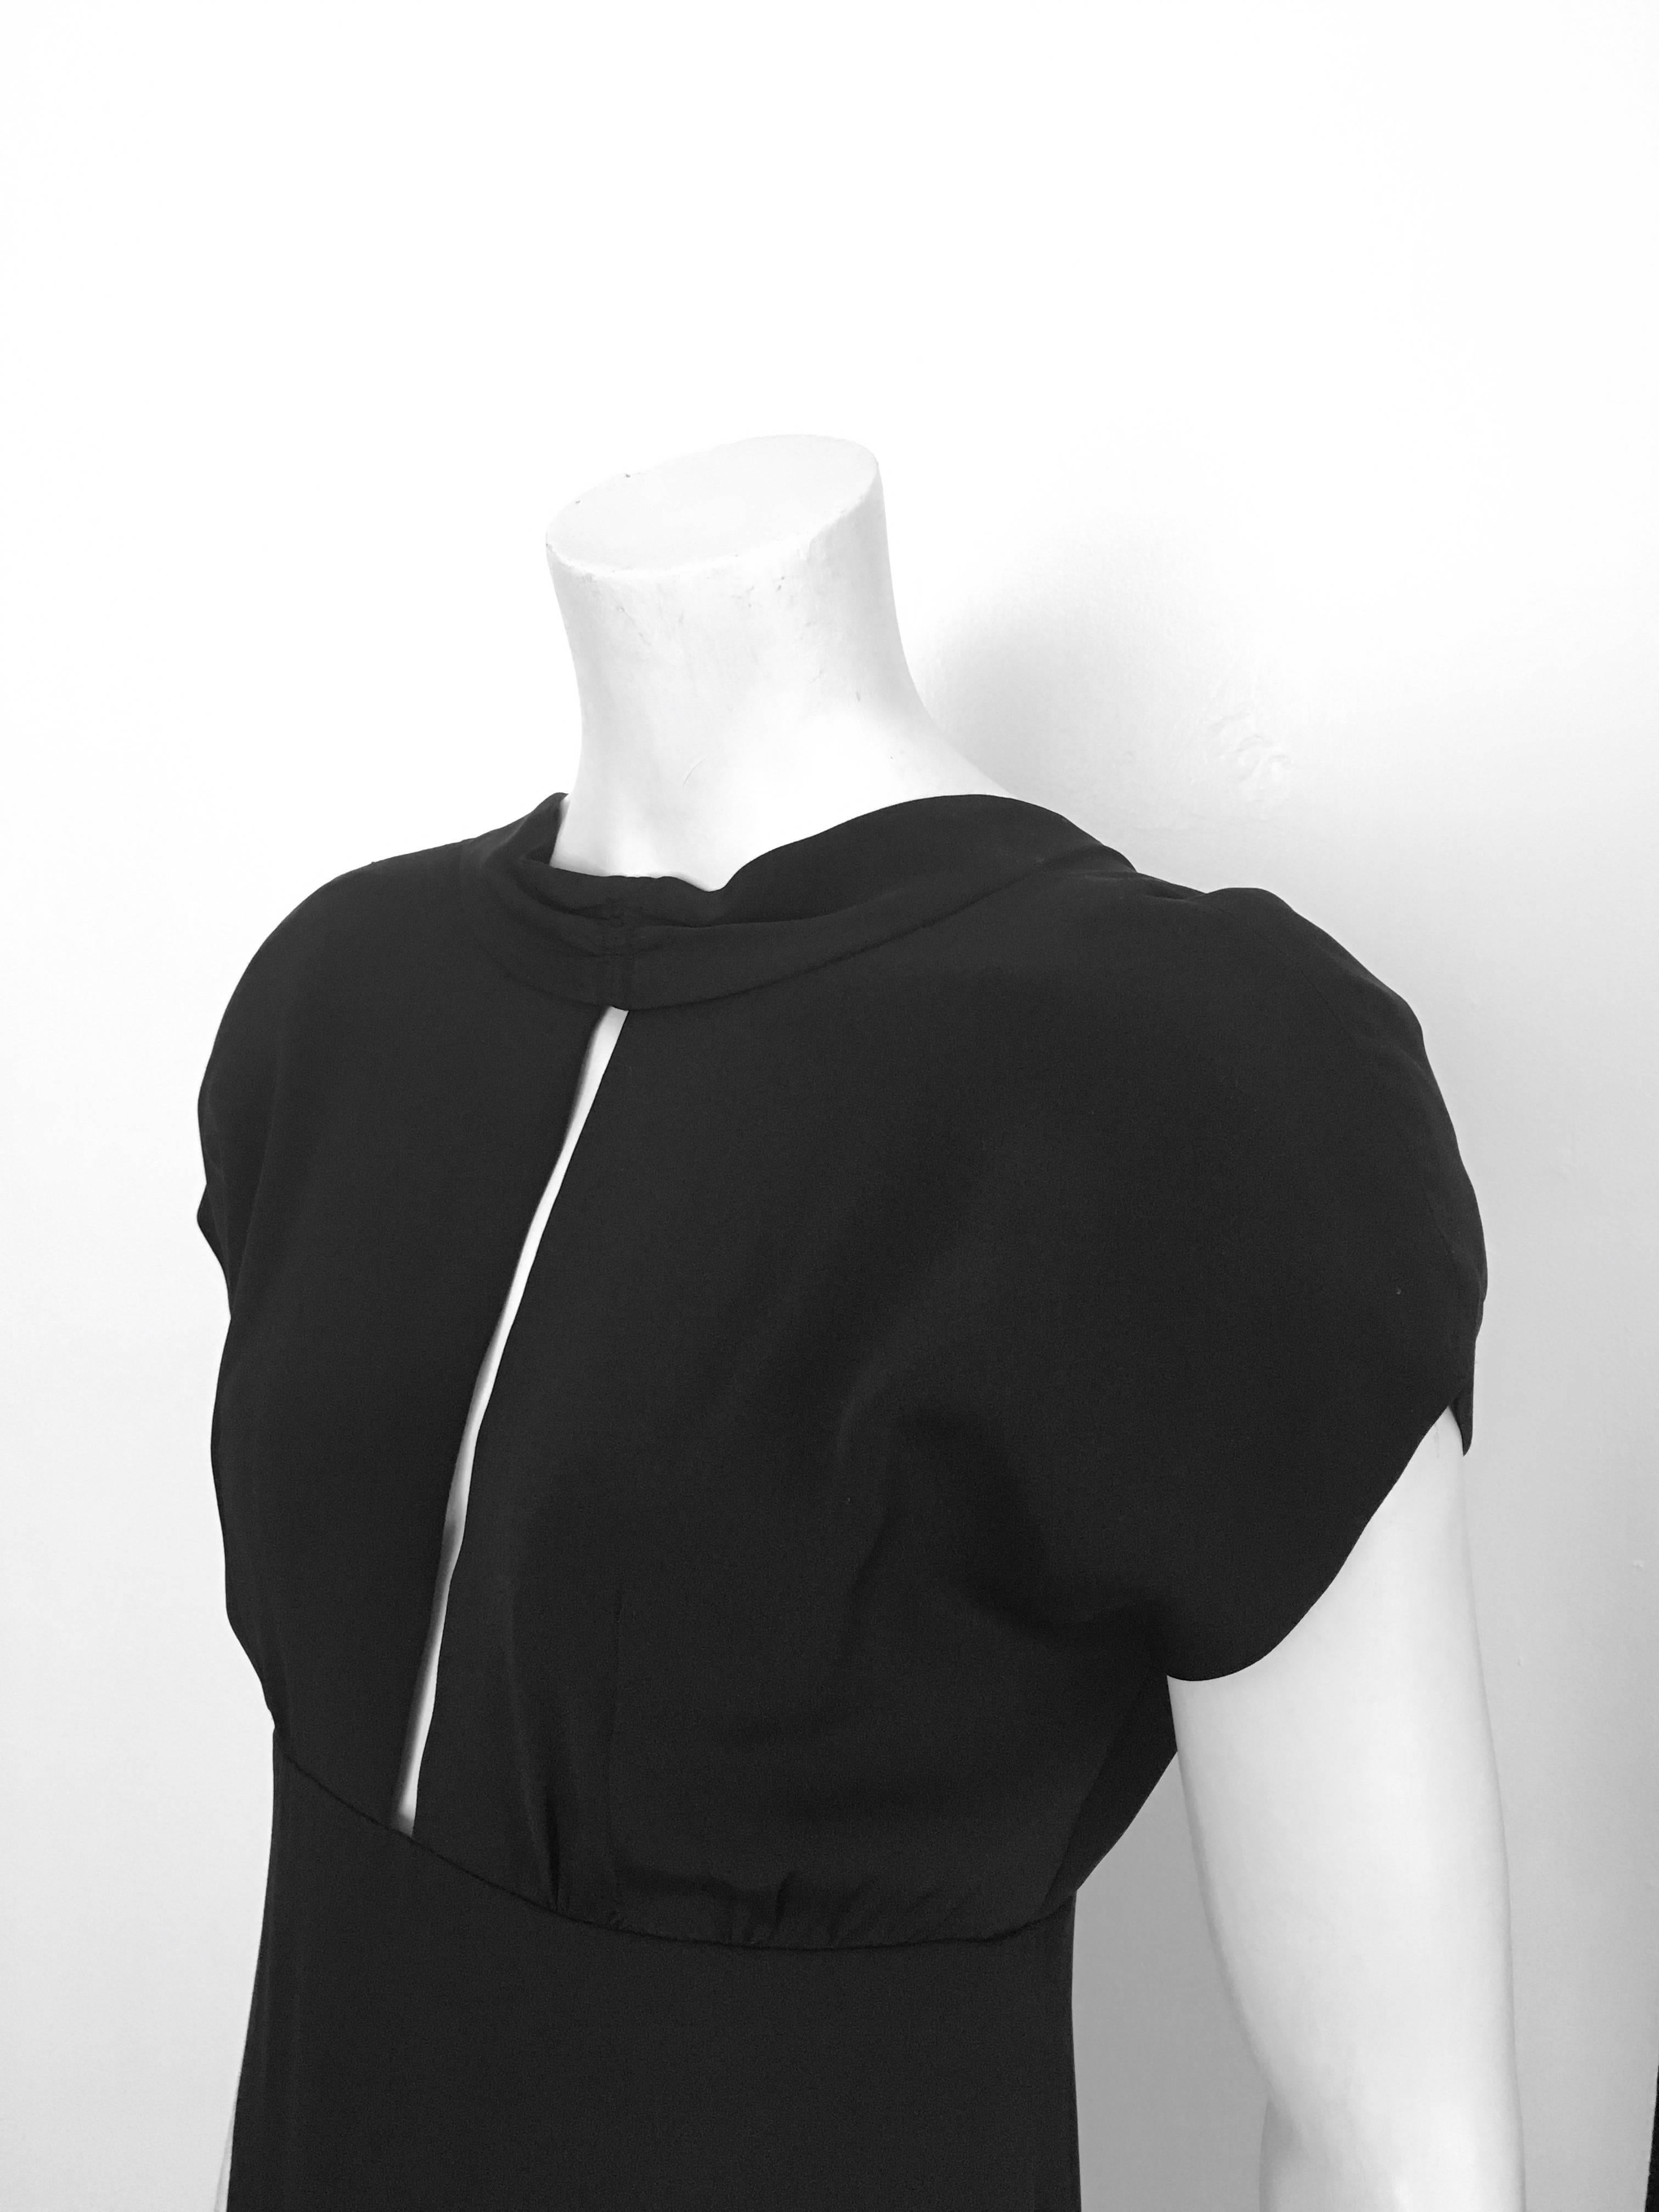 Adele Simpson 1980s Black Silk Dress Size 6.  For Sale 4